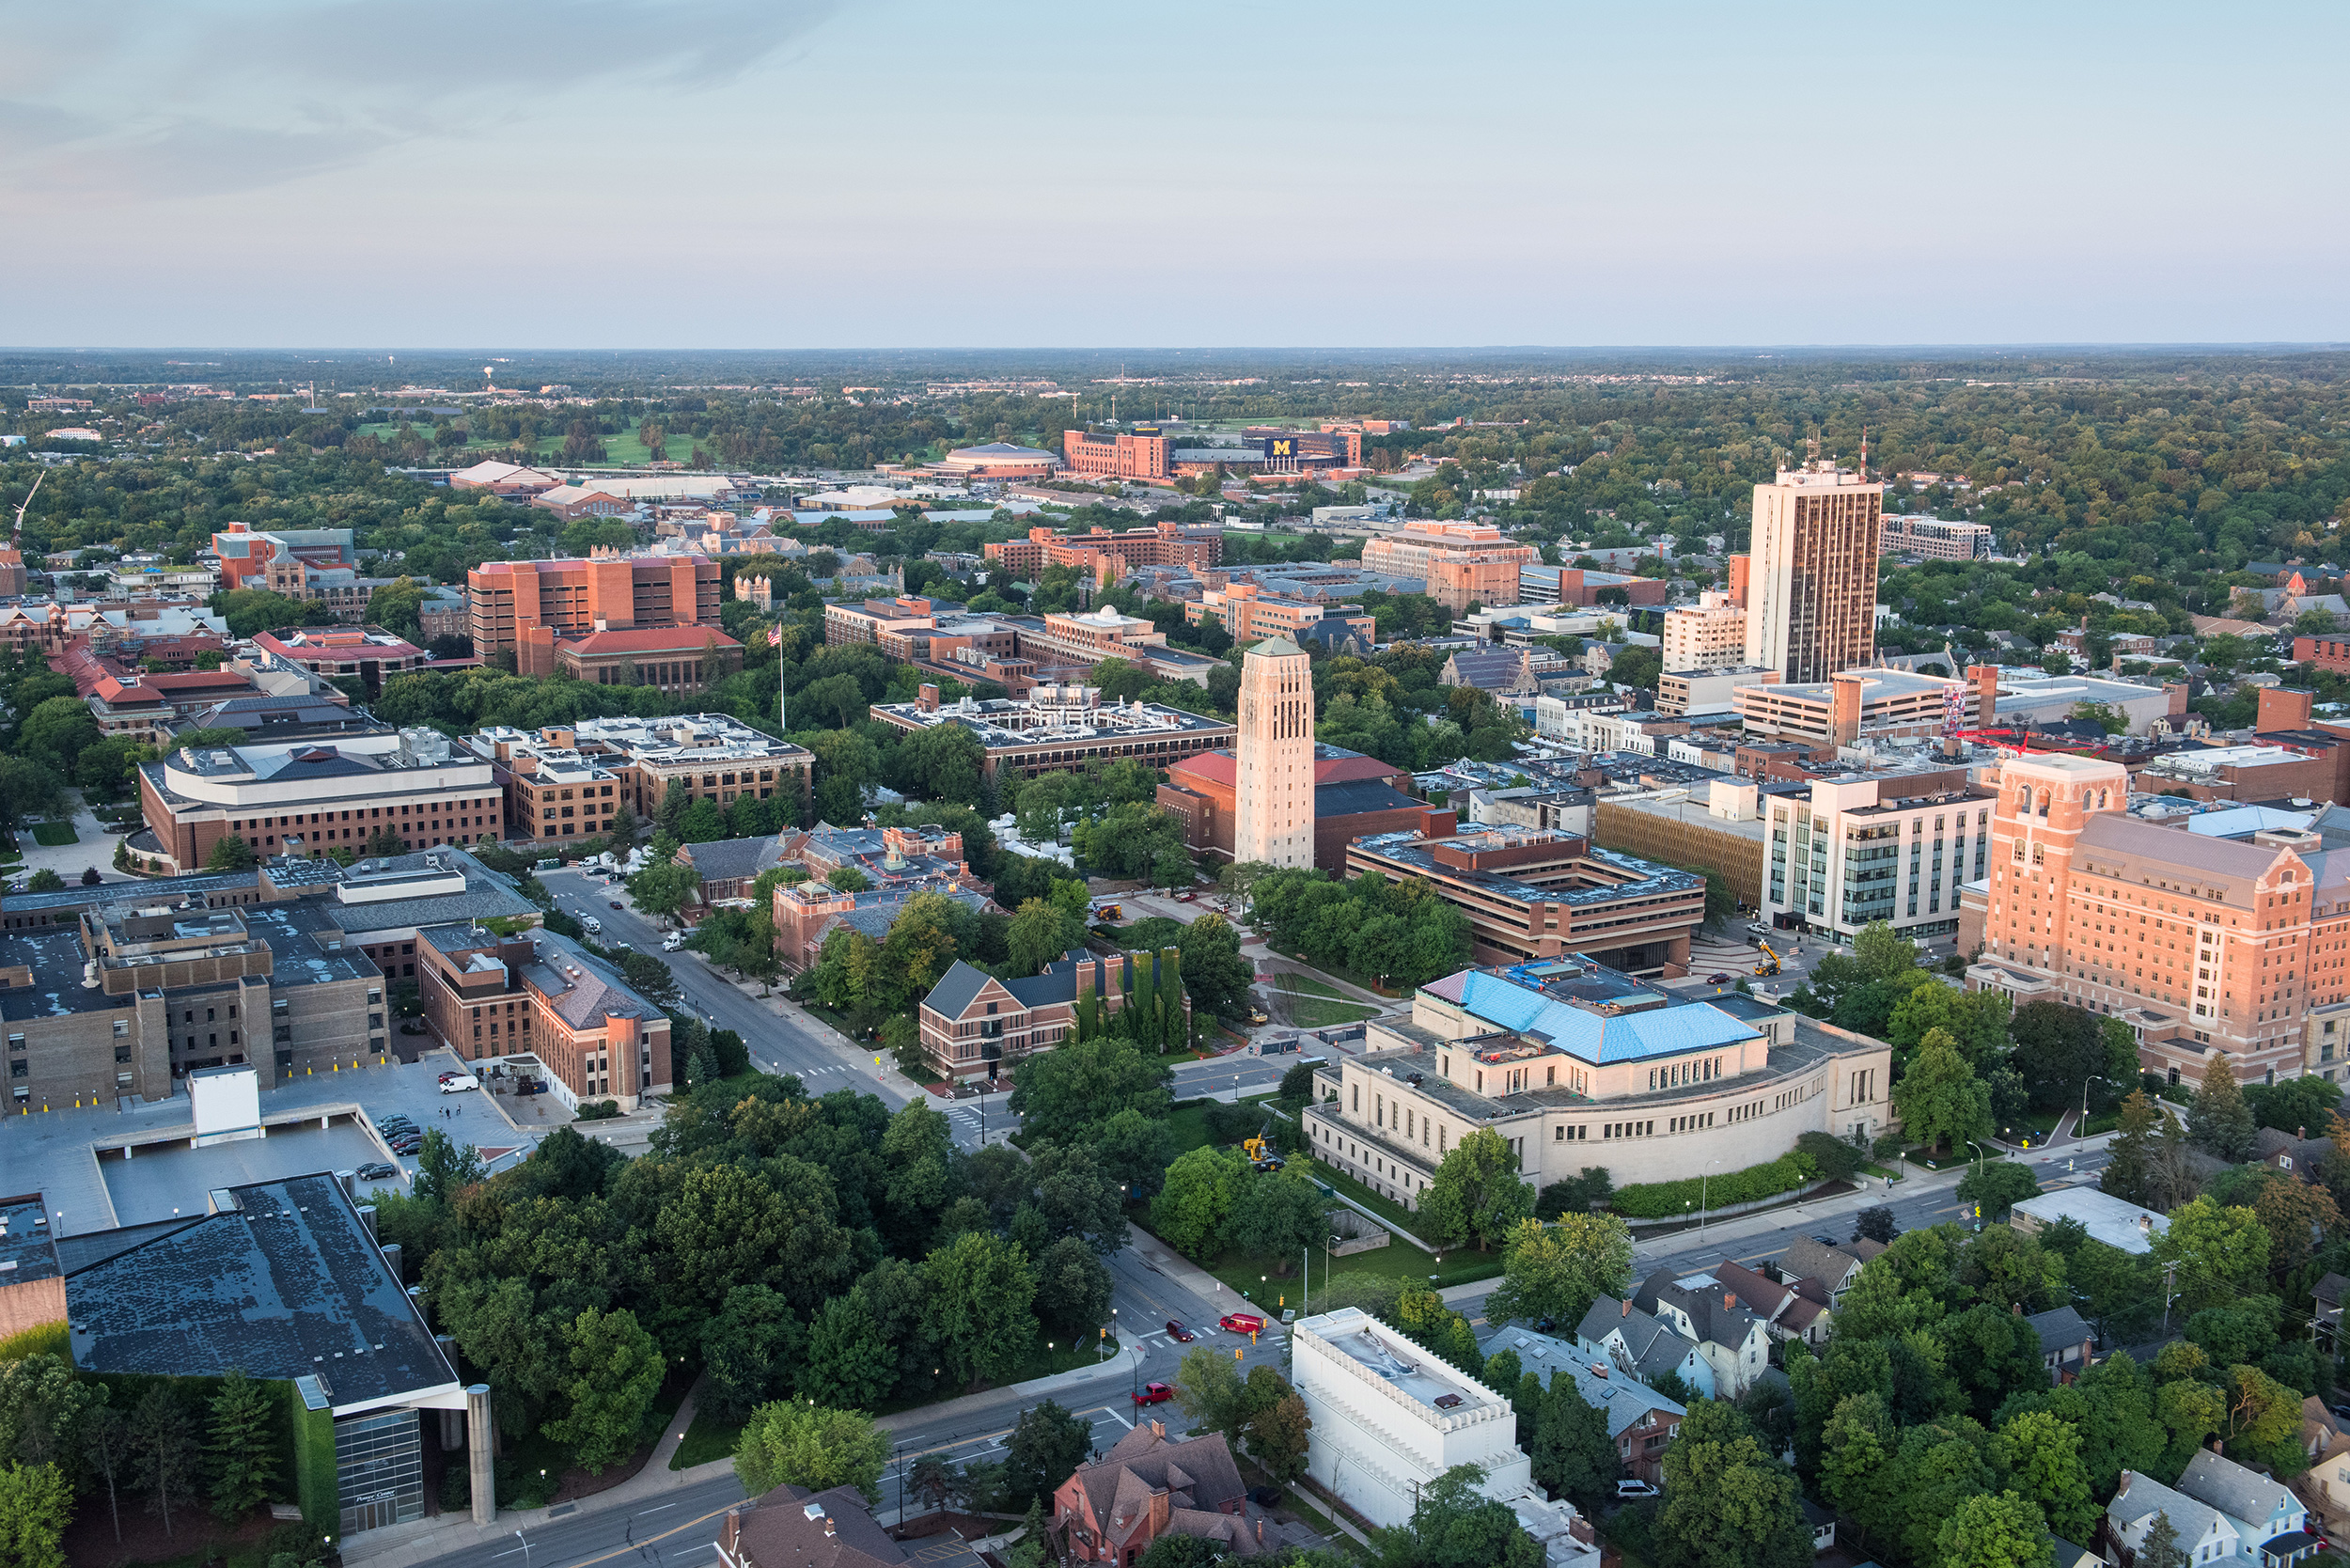 Aerial of central campus